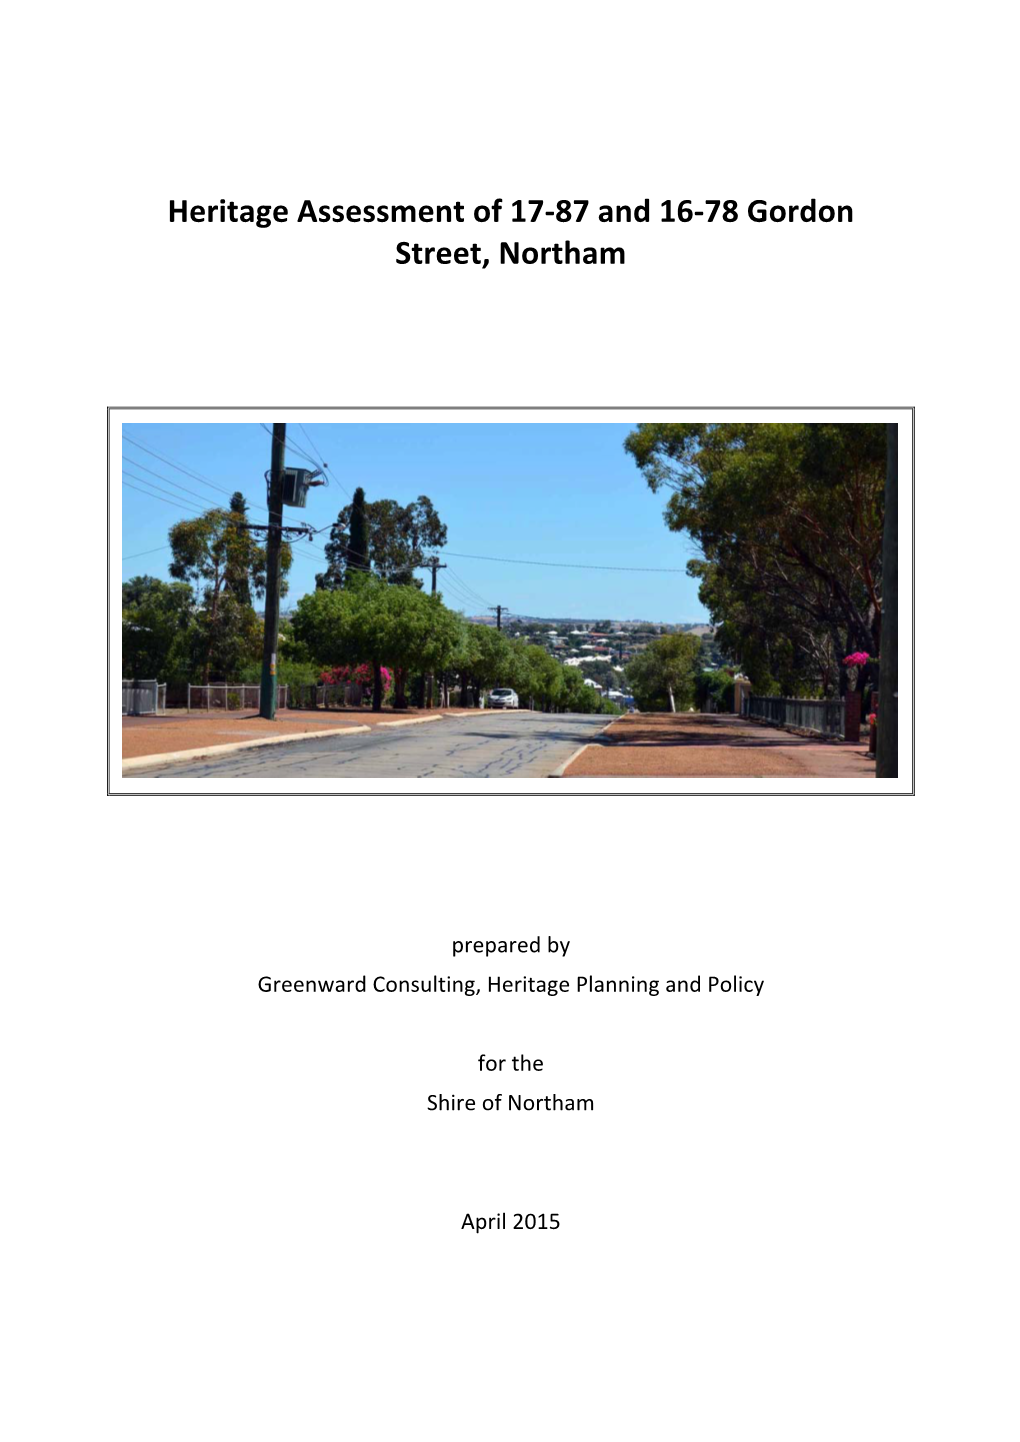 Heritage Assessment of 17-‐87 and 16-‐78 Gordon Street, Northam